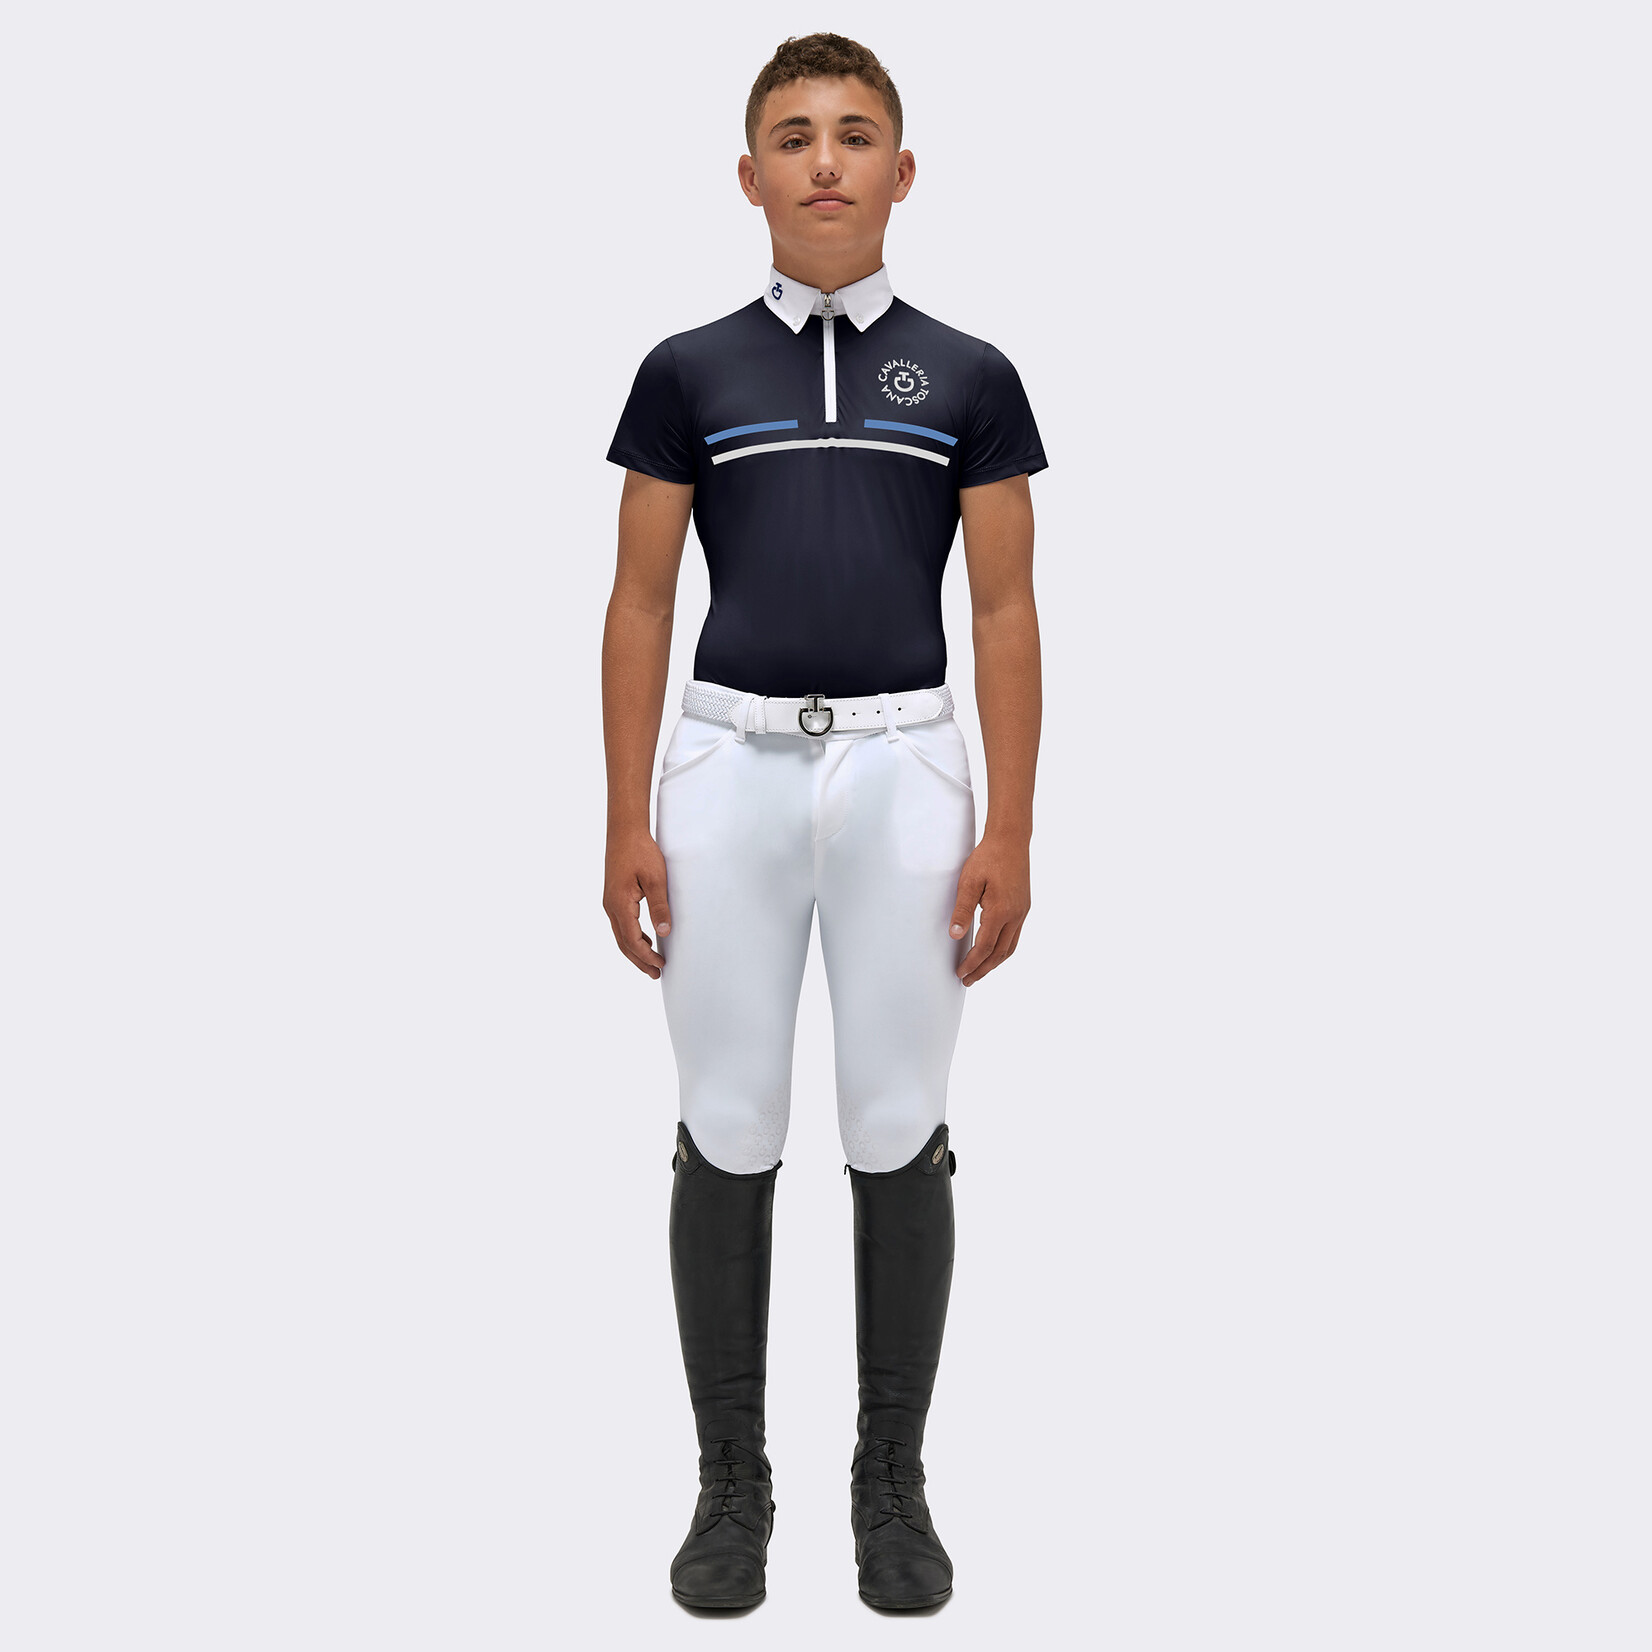 Cavalleria Toscana Cavalleria toscana boy's orbit print jersey zip polo